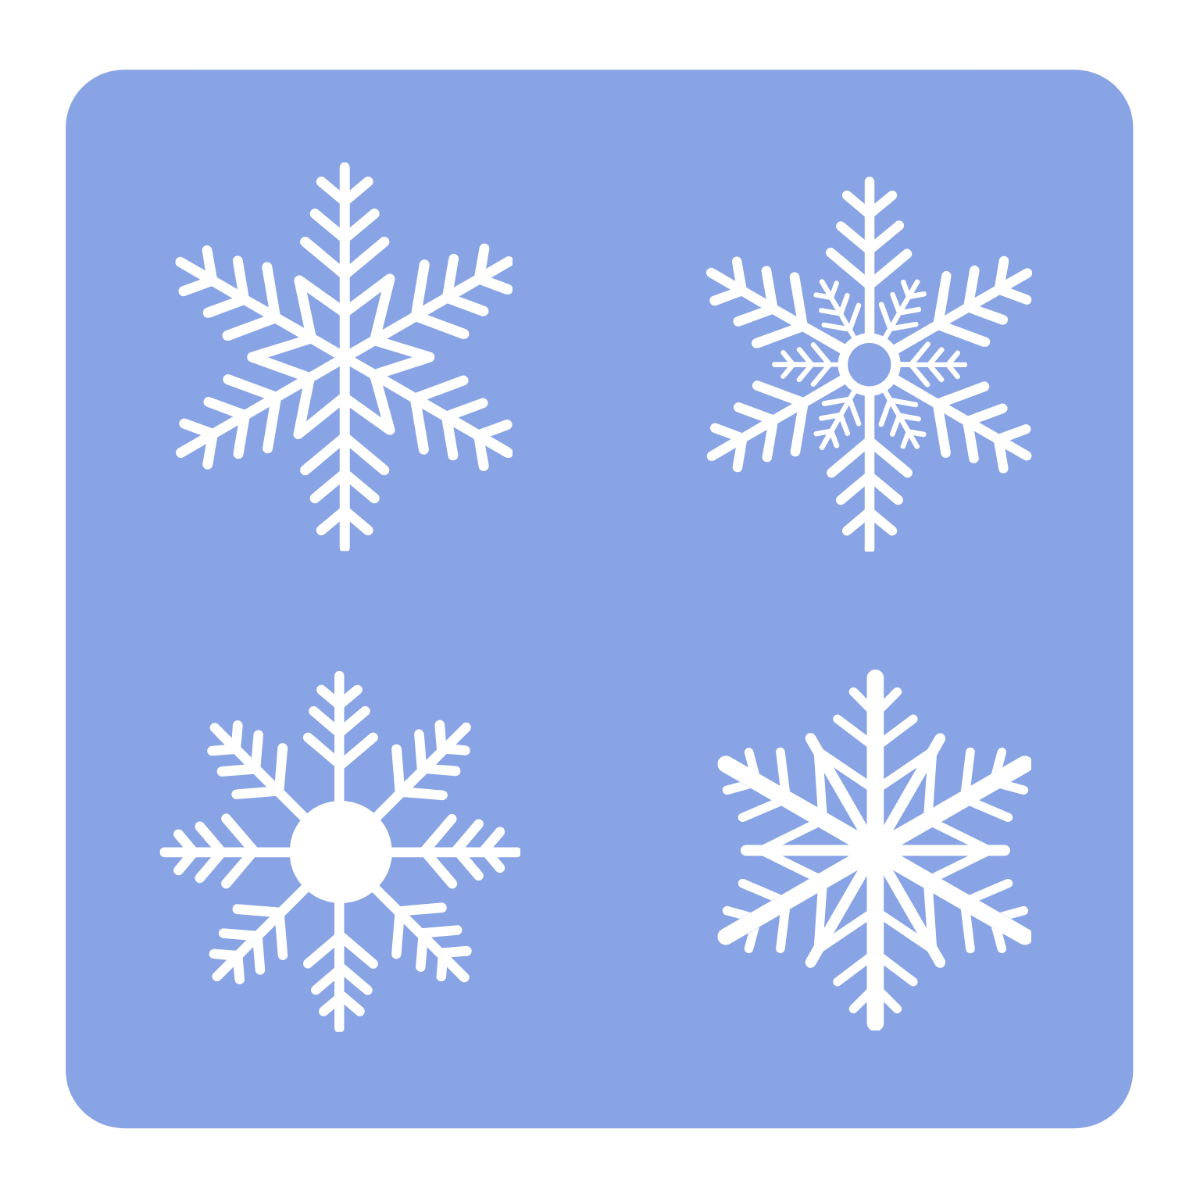 https://images.template.net/195841/free-white-snowflake-vector-edit-online.jpg